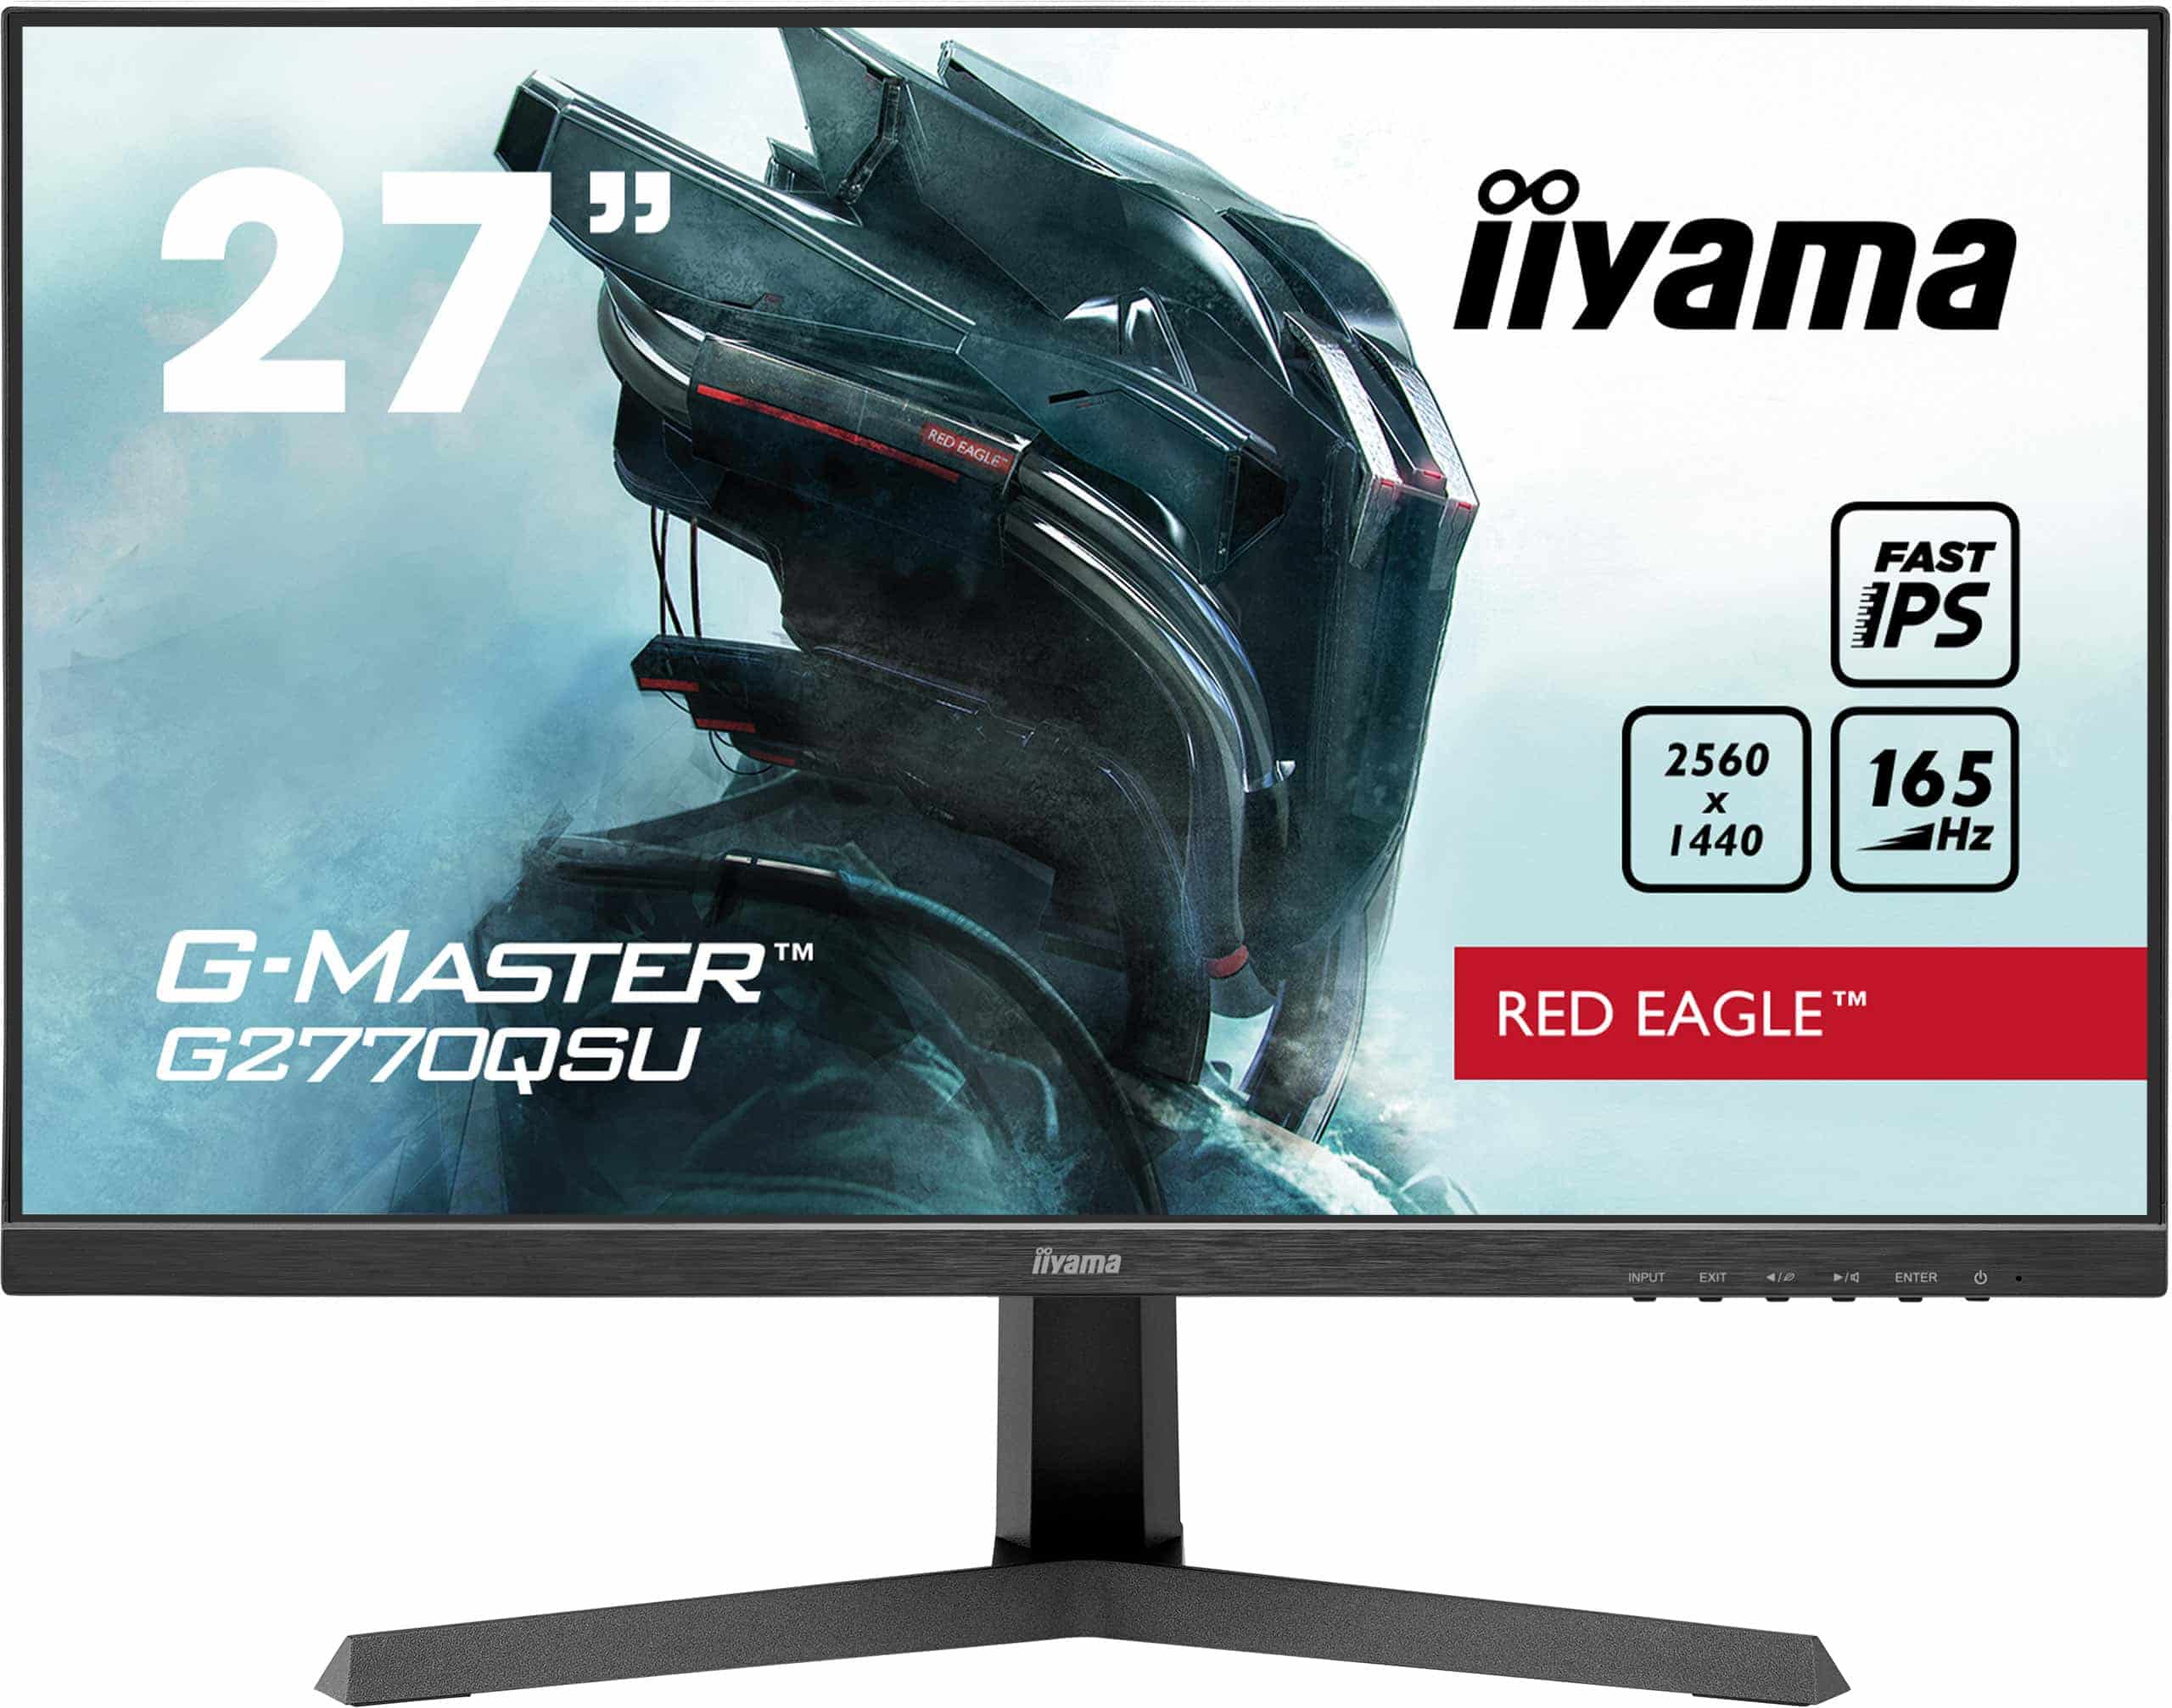 Iiyama G-MASTER G2770QSU-B1 RED EAGLE | 27" | 165Hz | fast IPS | WQHD  | Gaming Monitor